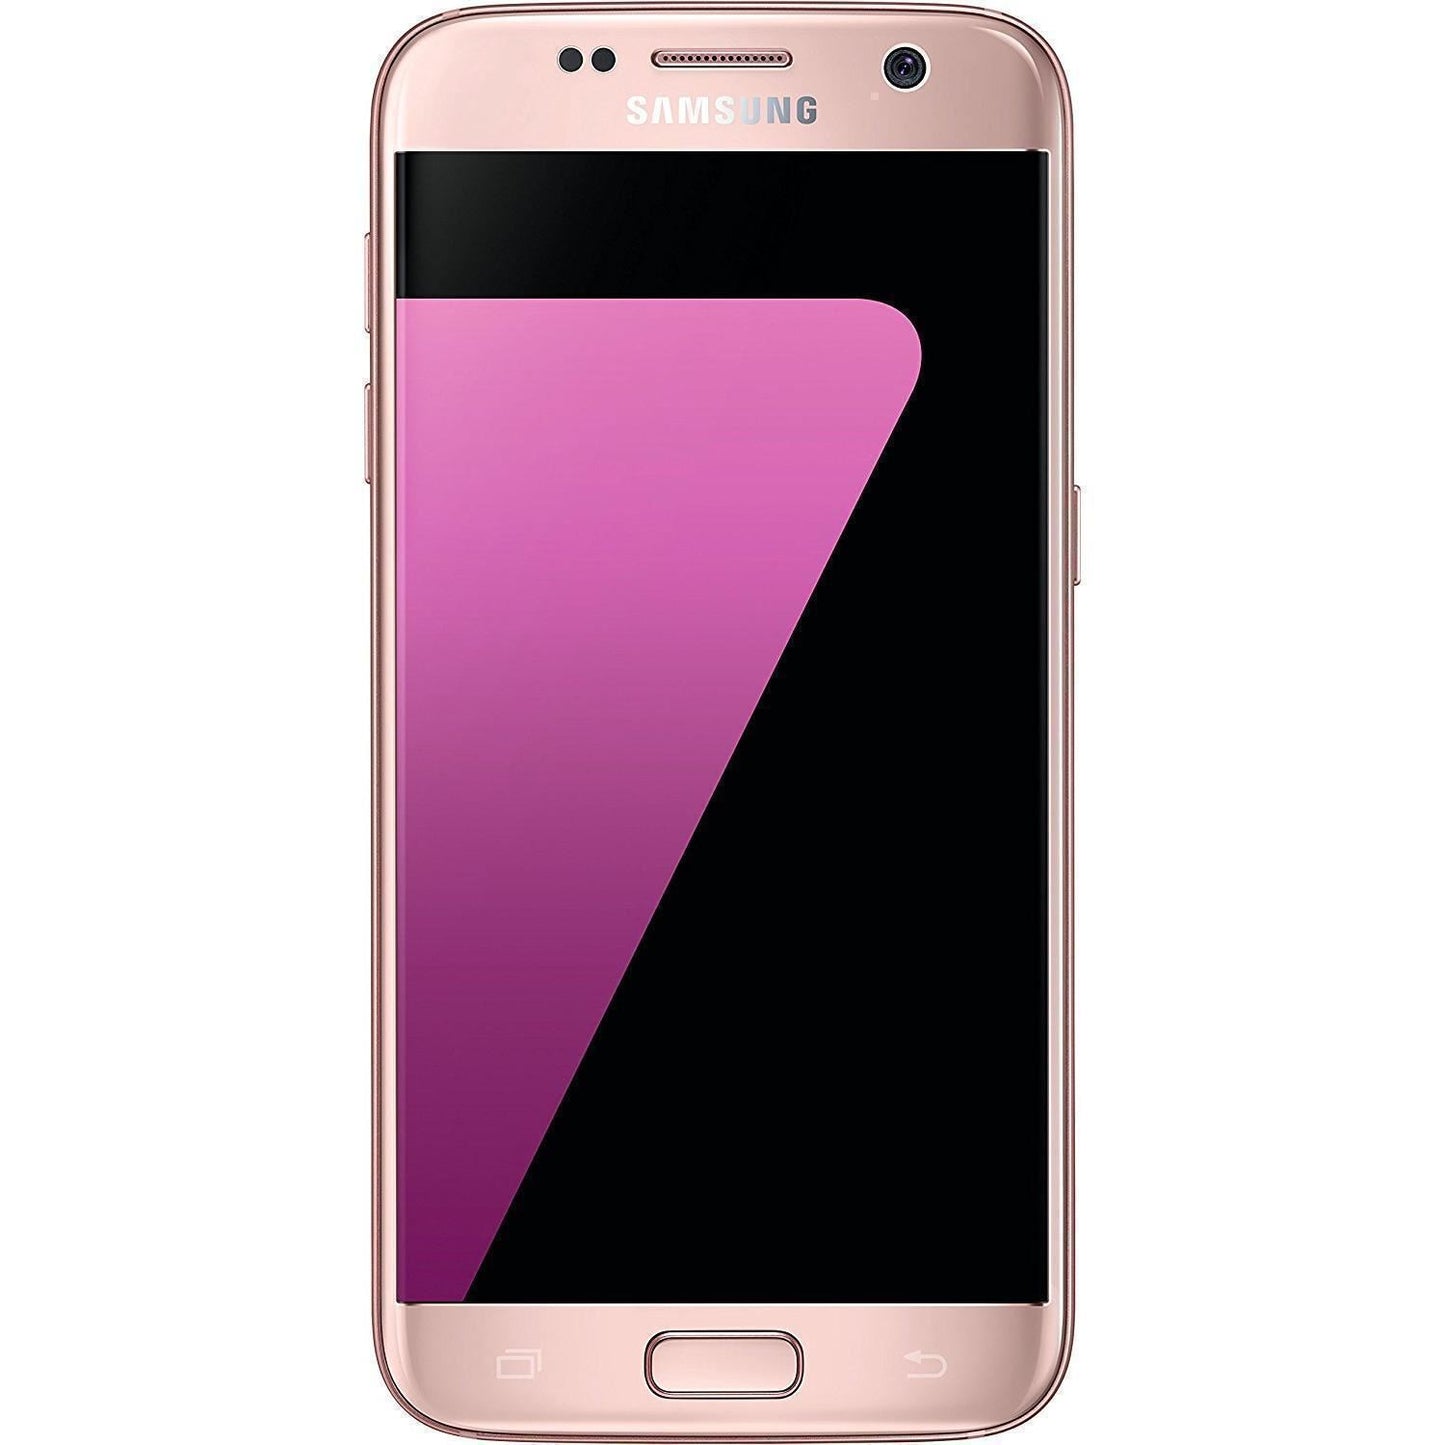 Samsung Galaxy S7 4G Smartphone Unlocked Android 32-64GB